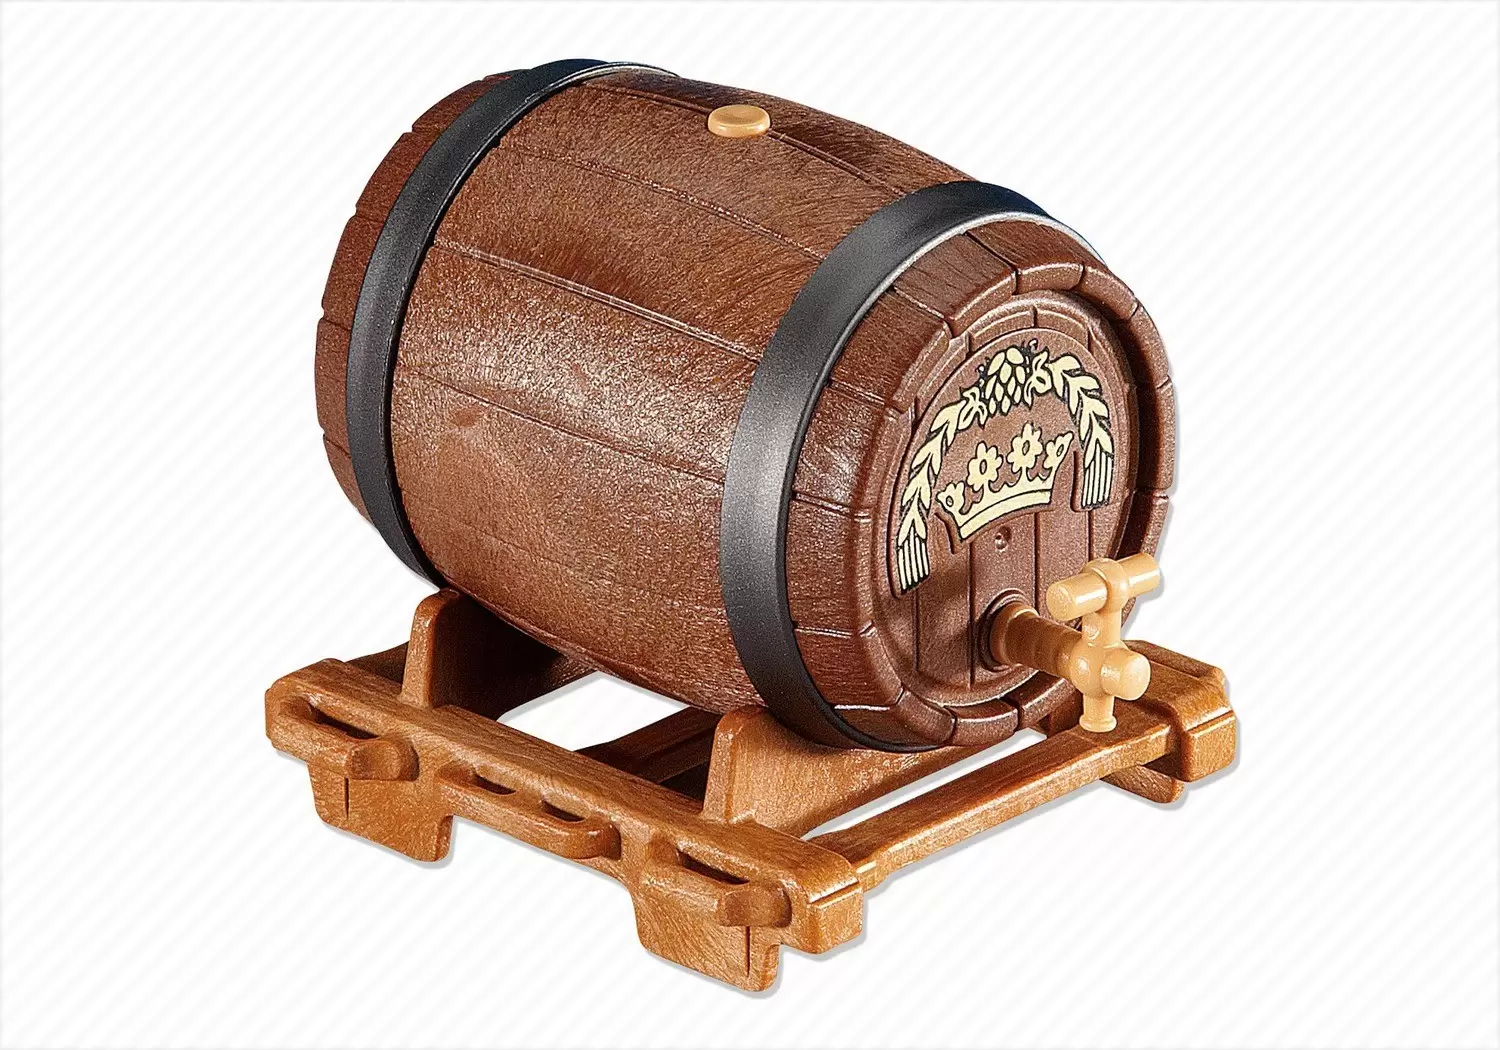 Playmobil Accessories & decorations - Large Wine Barrel